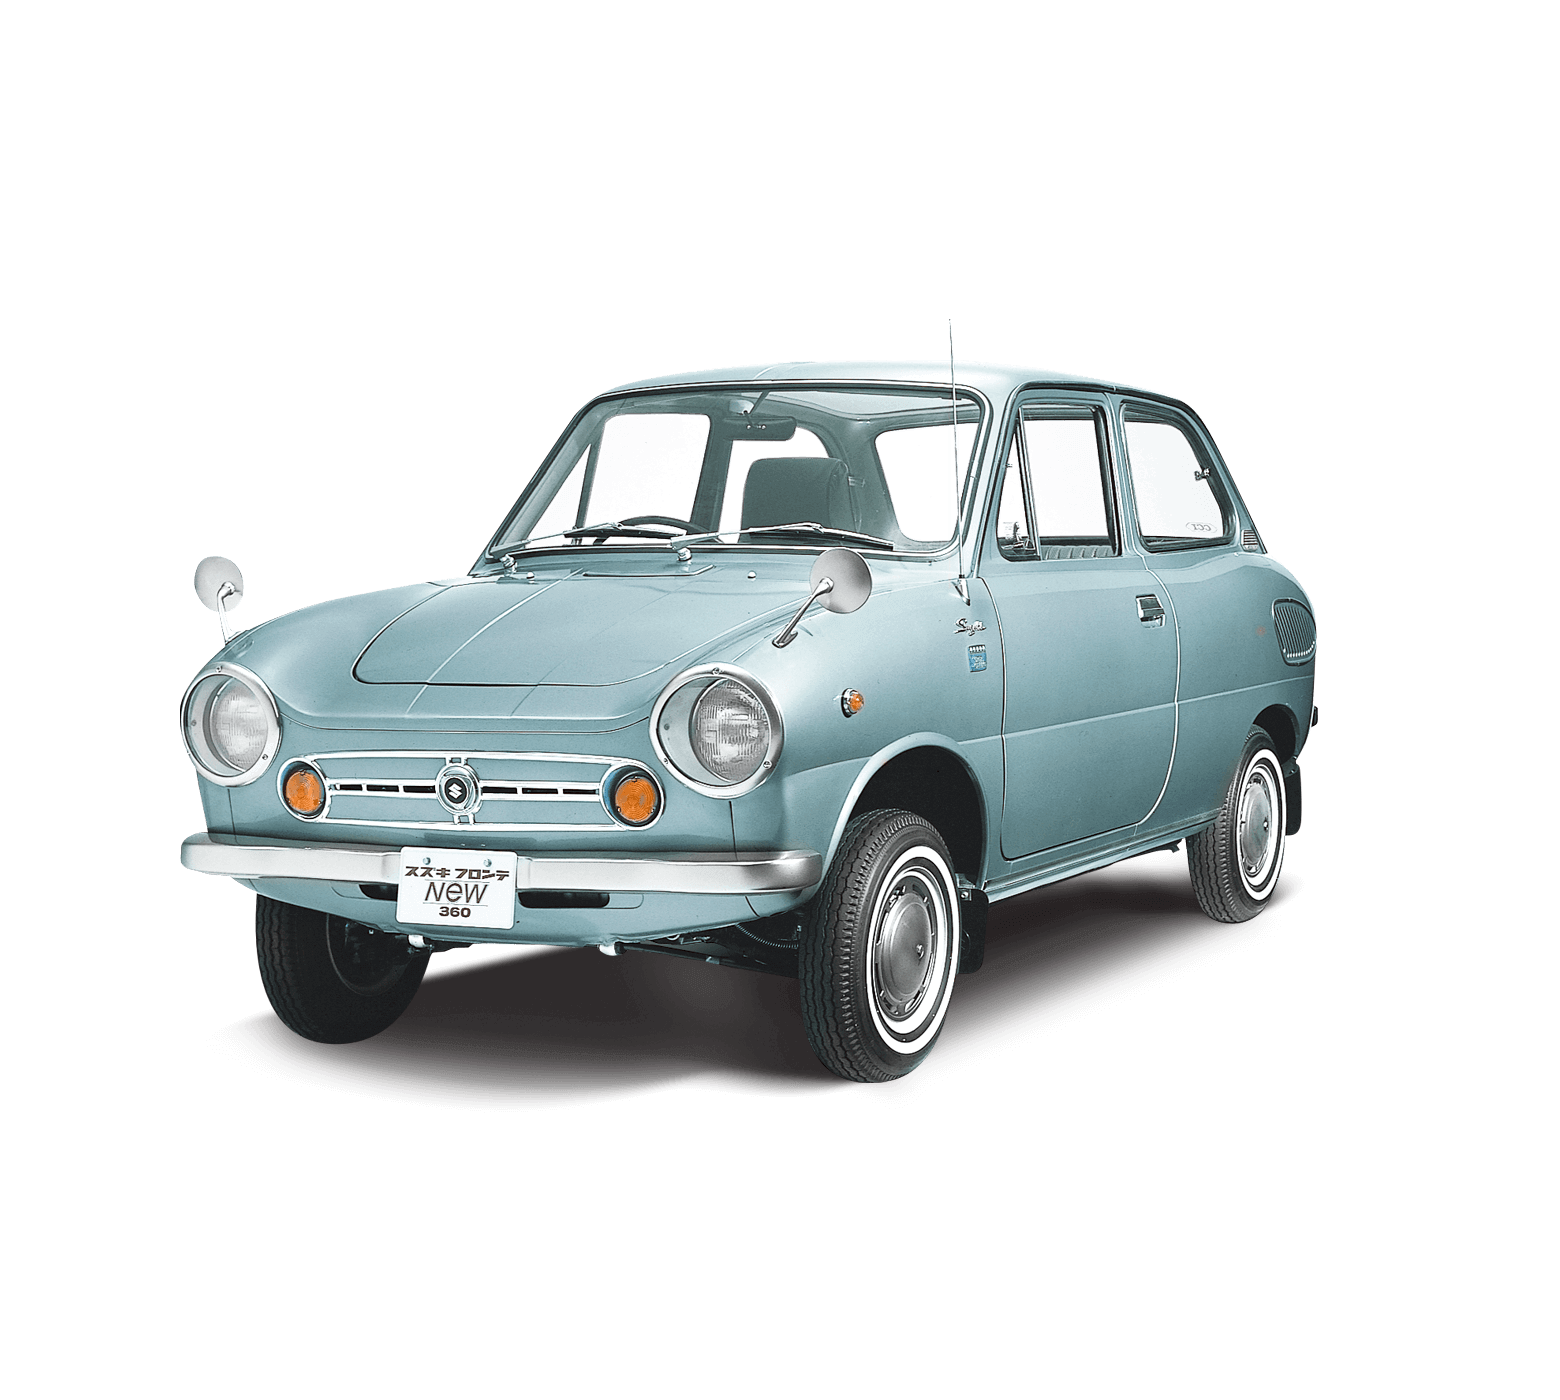 Suzuki Suzuki covid-19